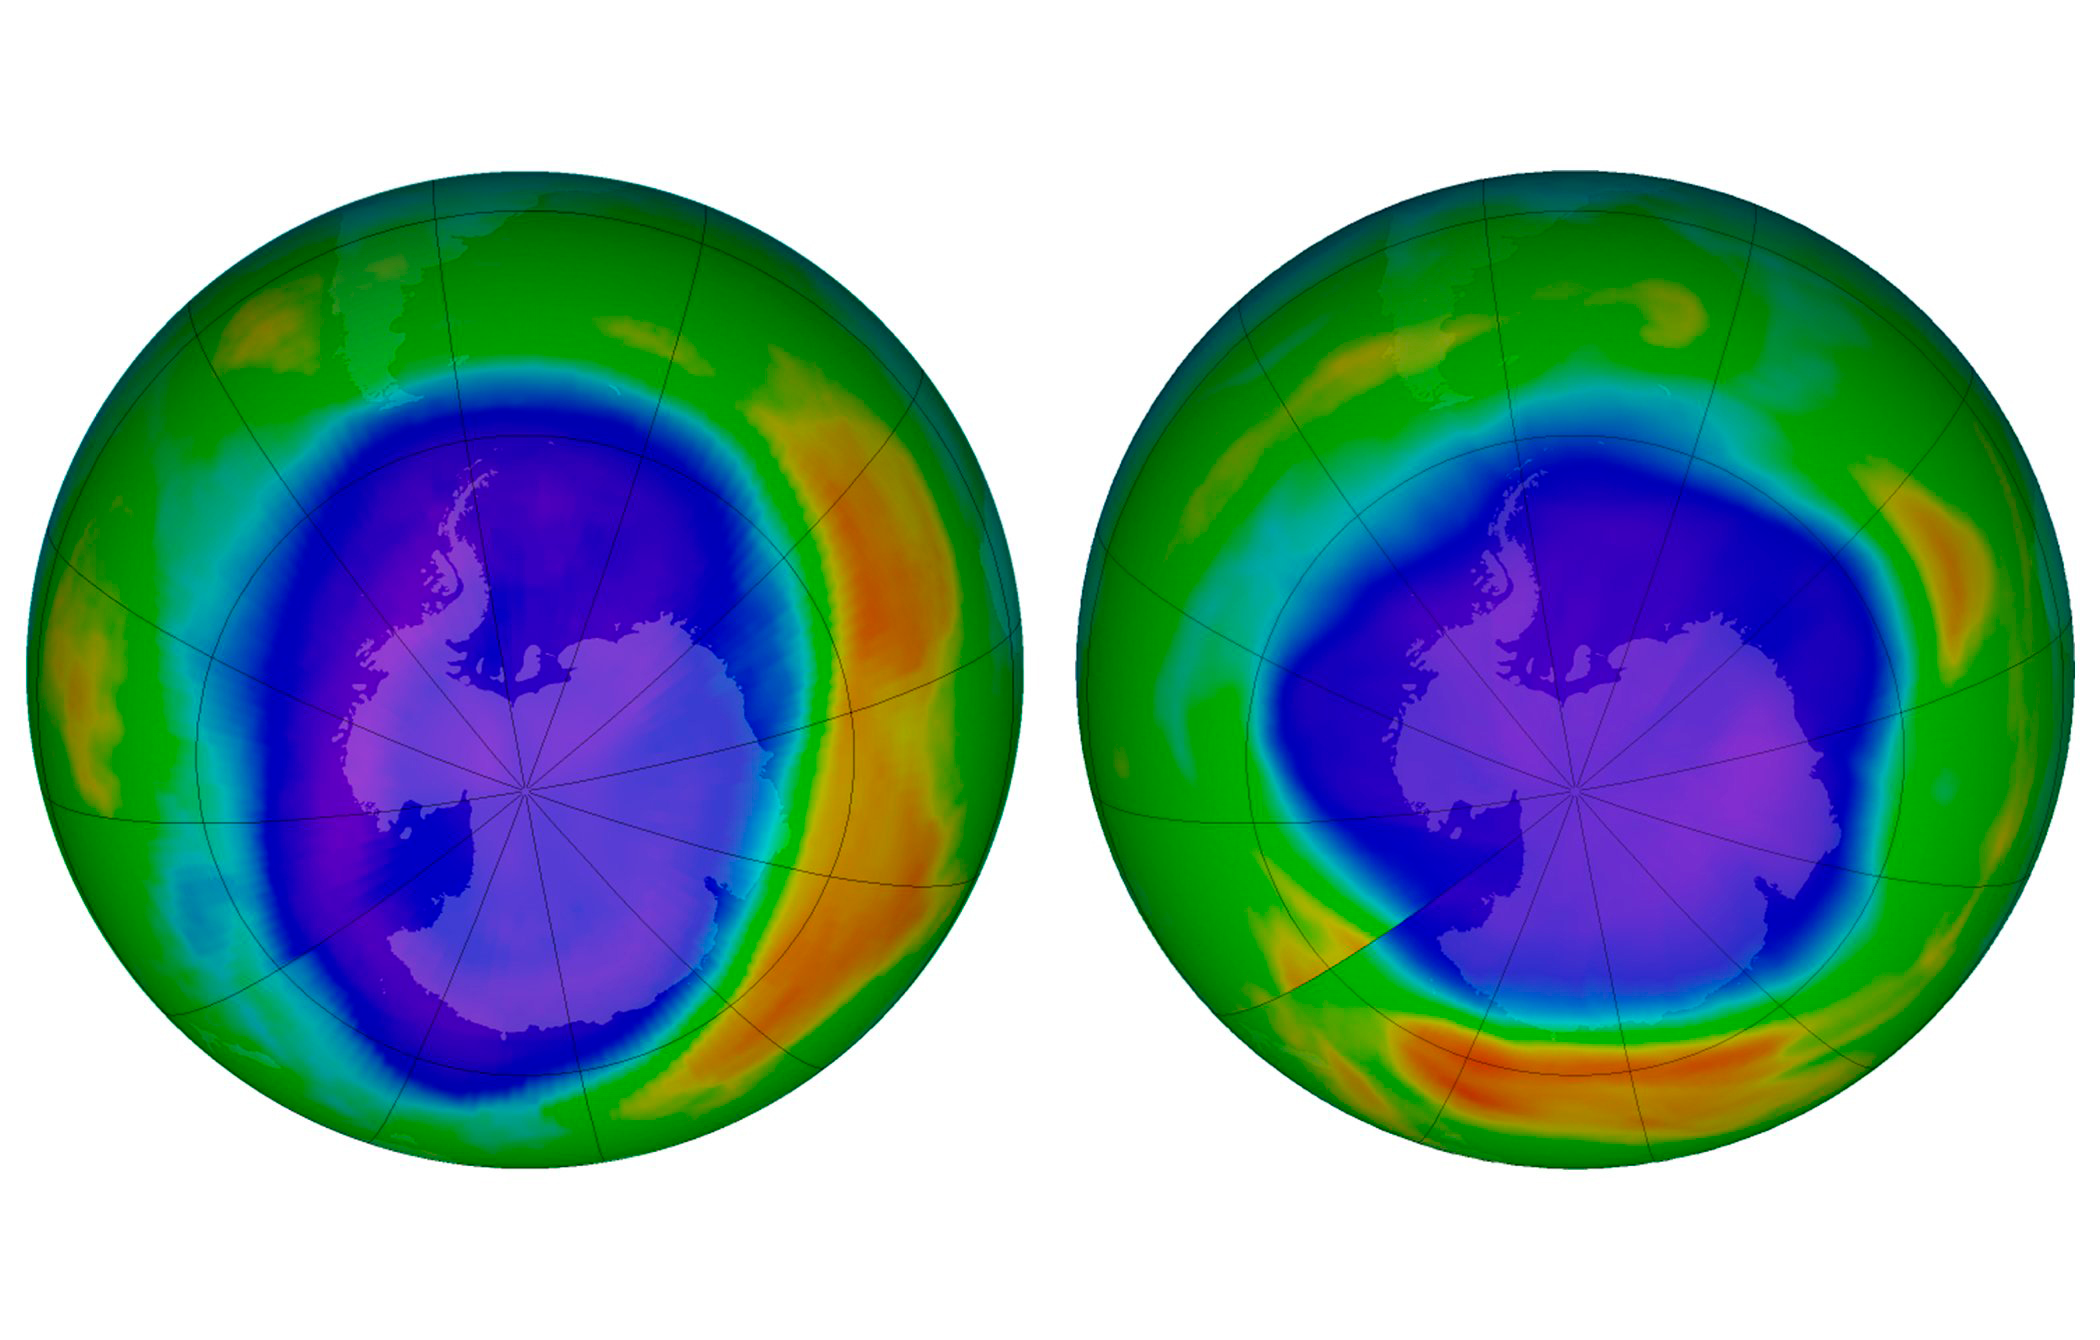 ozone rays around the earth